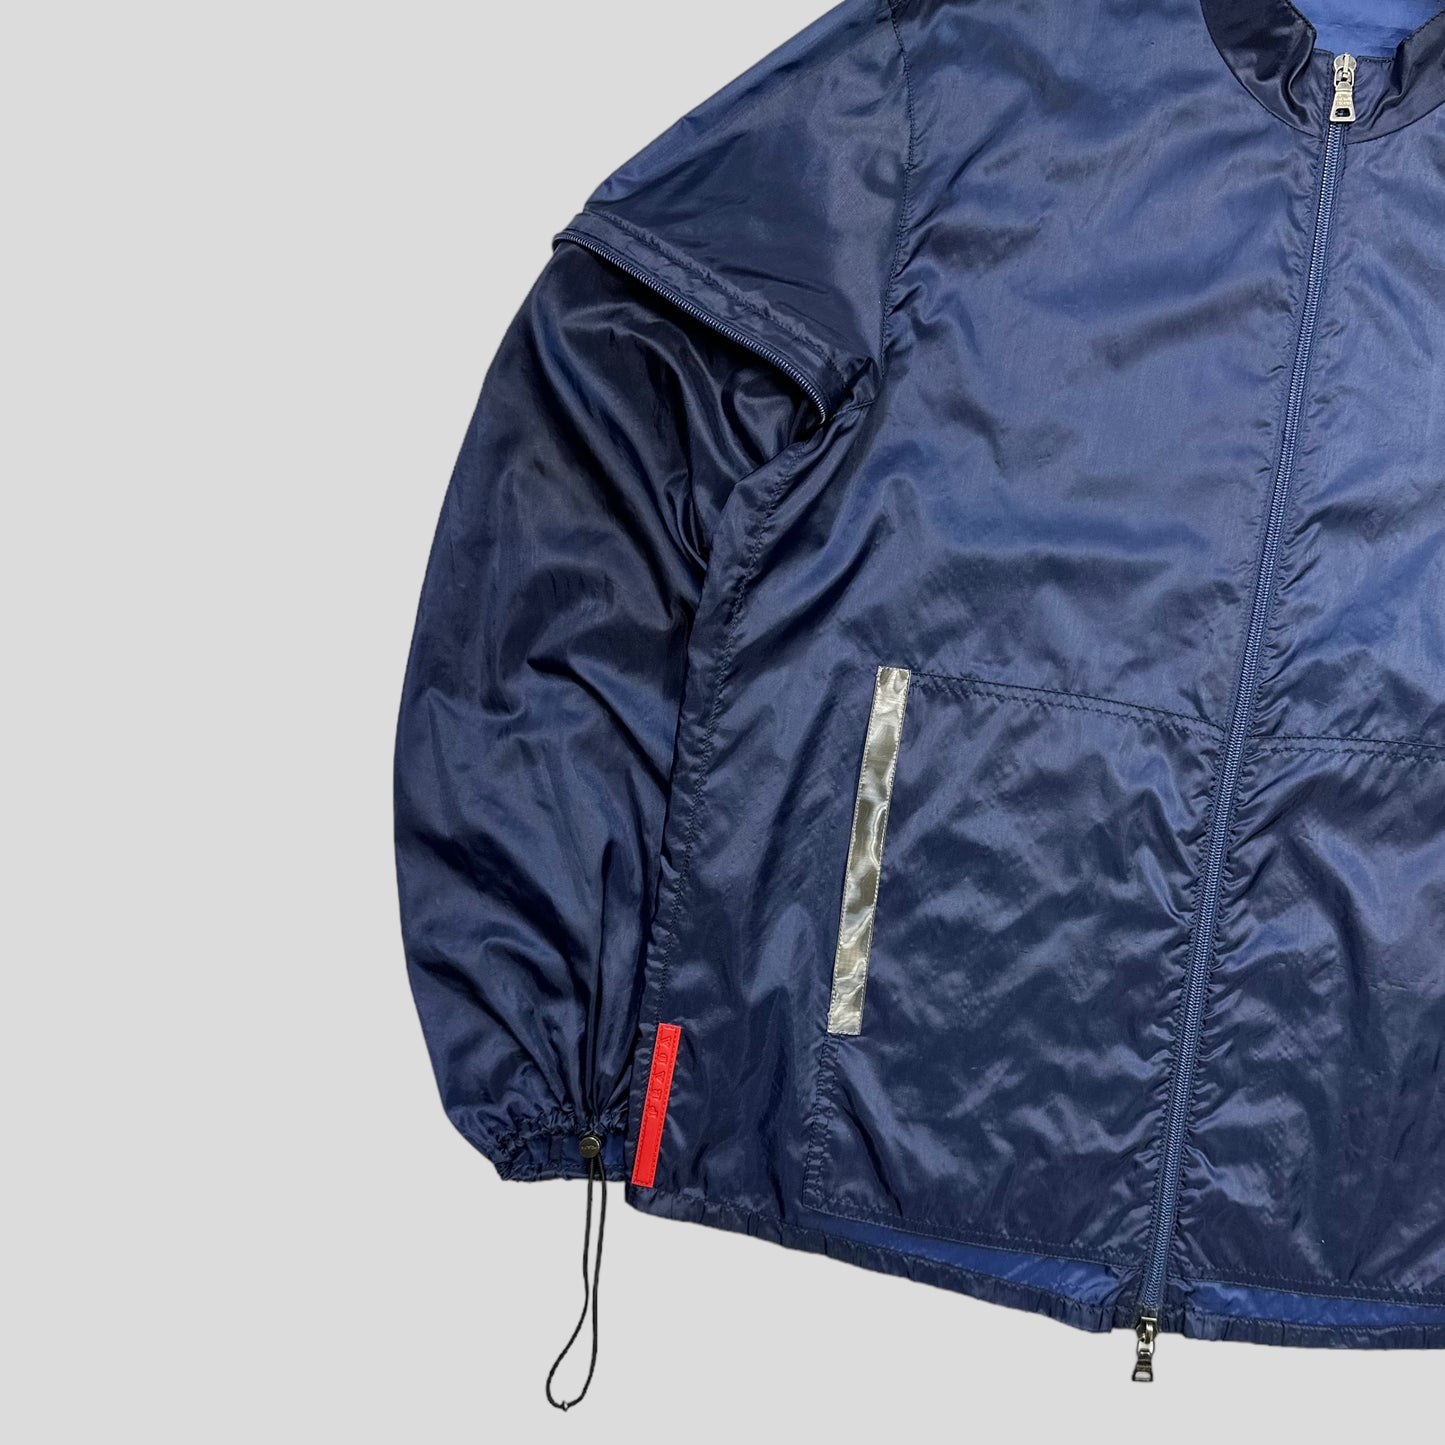 Prada Sport SS99 Convertible Blue Transparent 3m Jacket - IT48